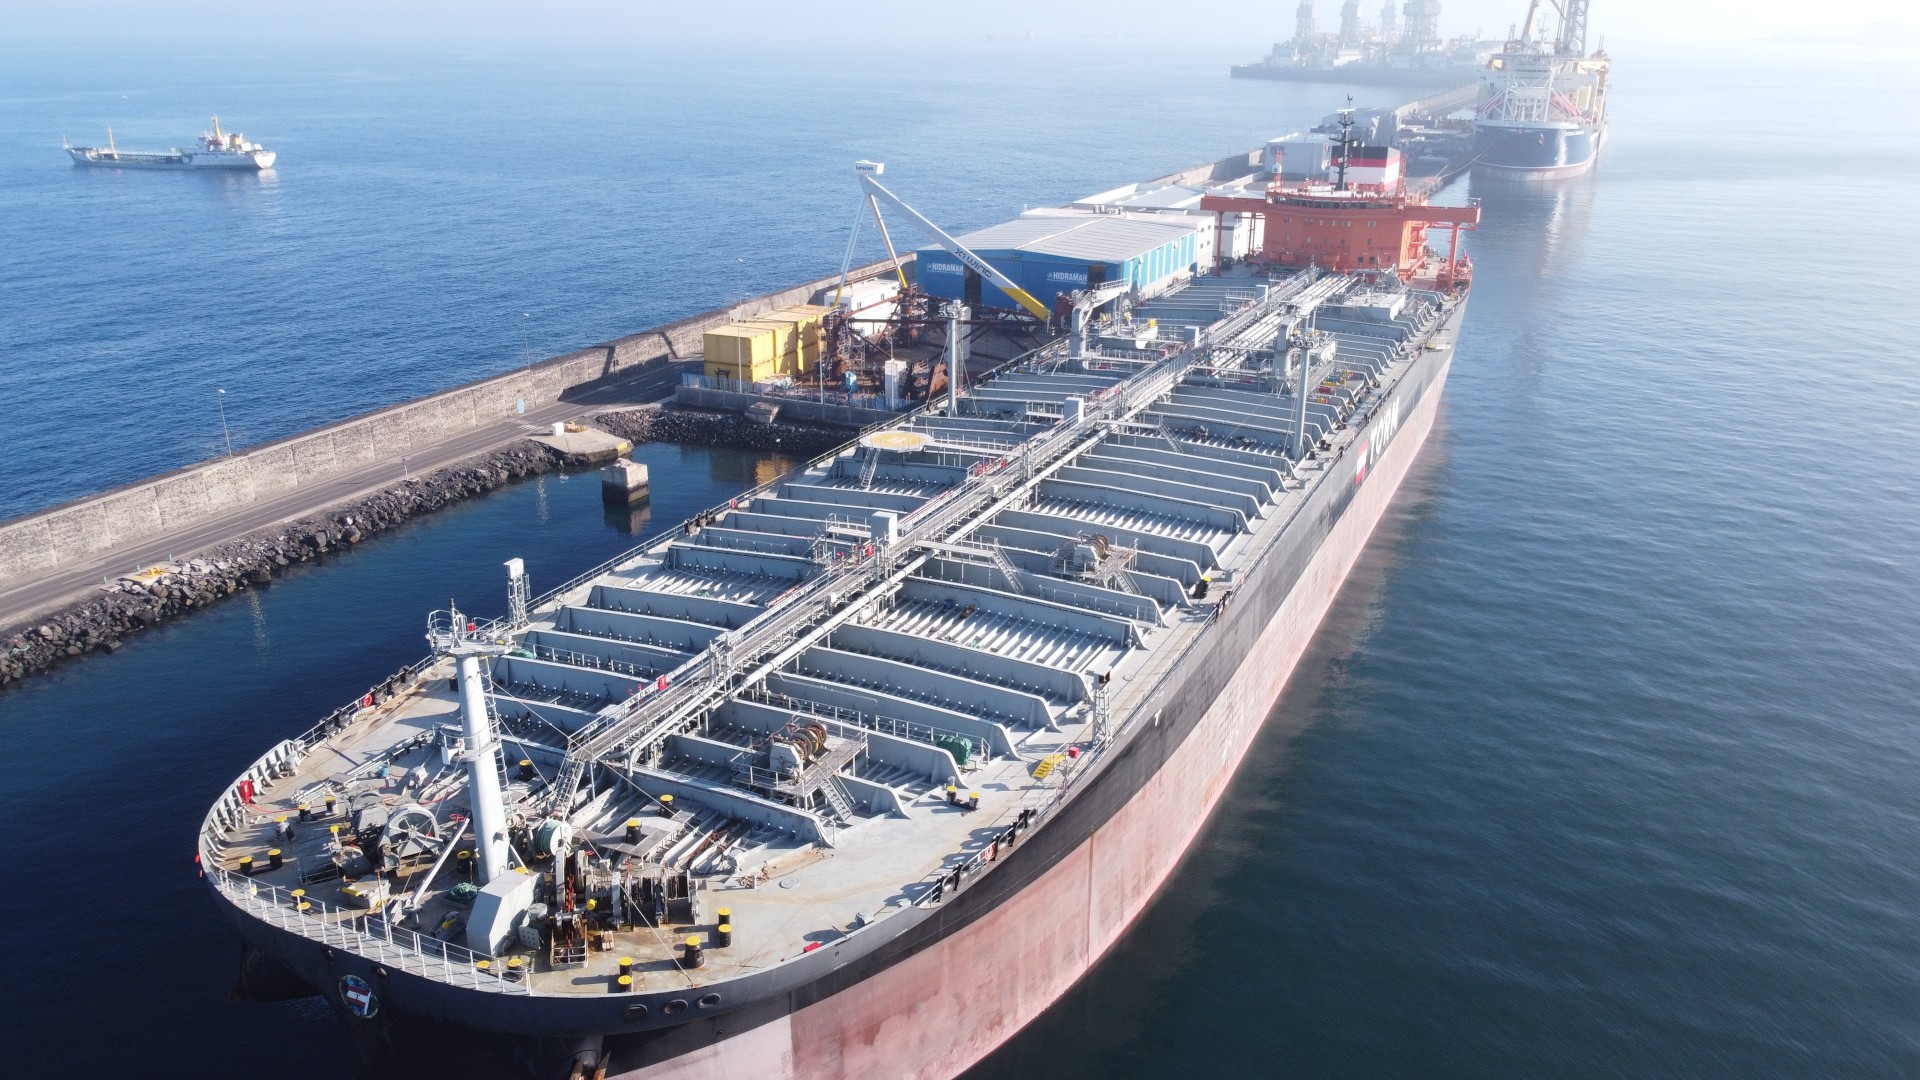 hidramar-group-takes-on-hull-repair-of-a-crude-oil-tanker-vessel-ship-001.jpg